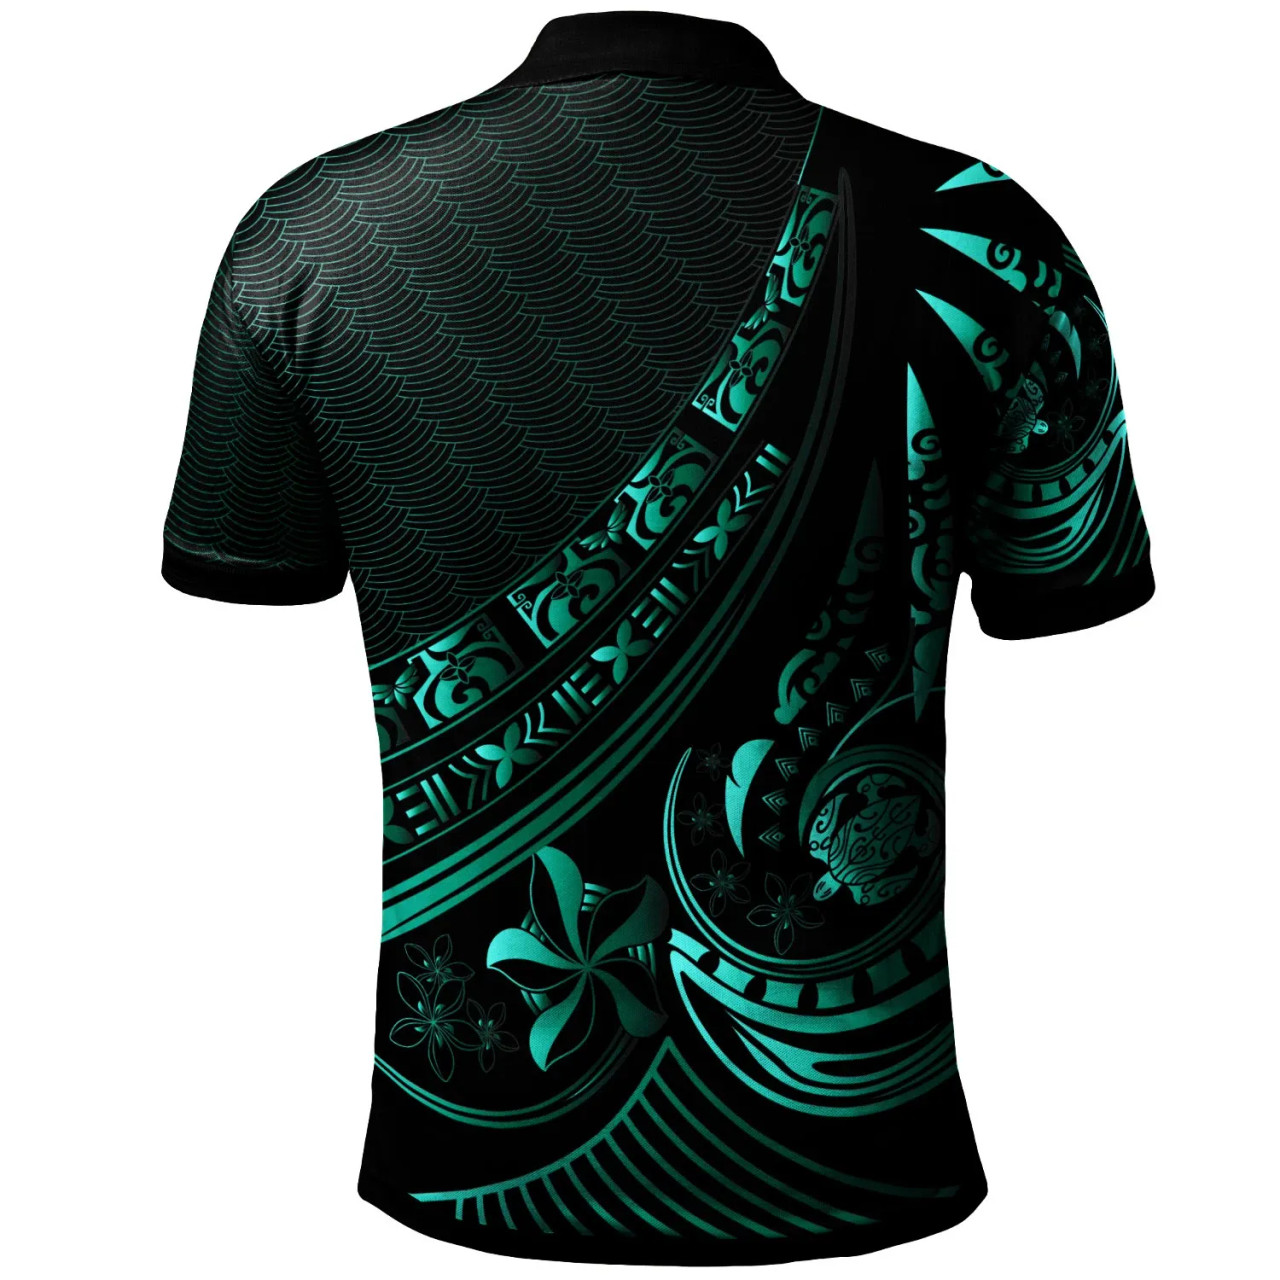 Tonga Polo Shirt - The Flow Of The Ocean Green 2